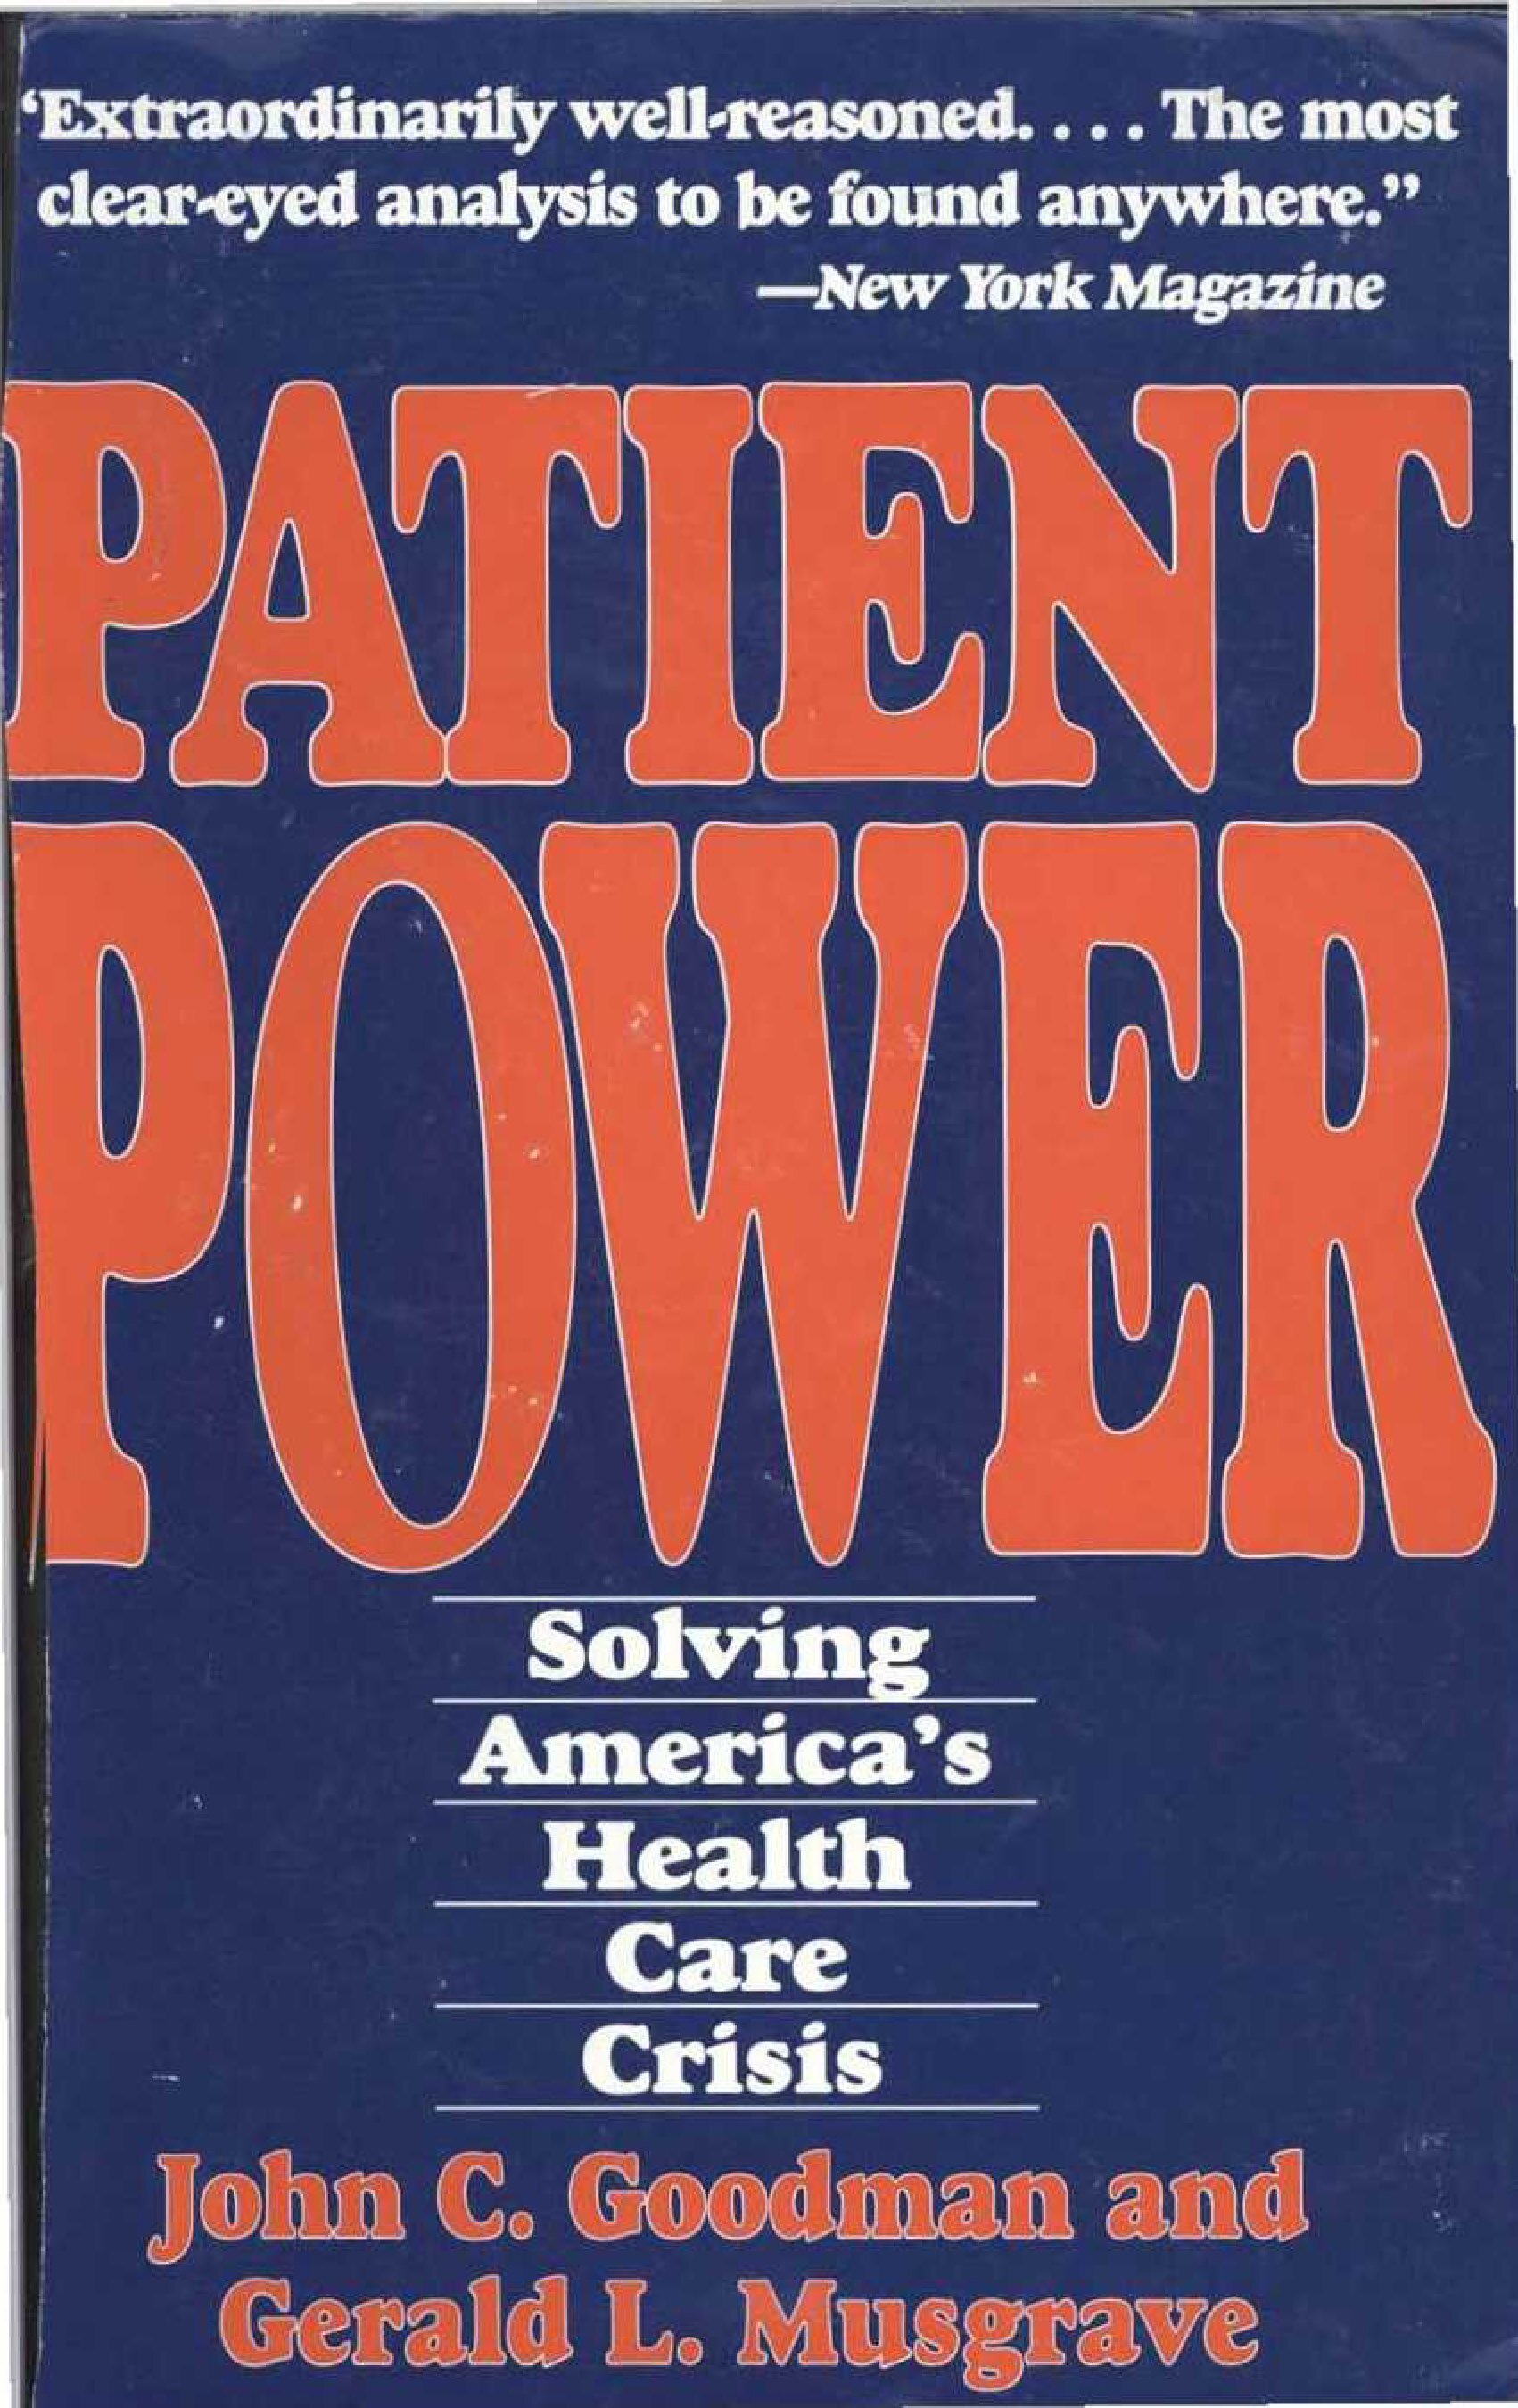 Patient Power